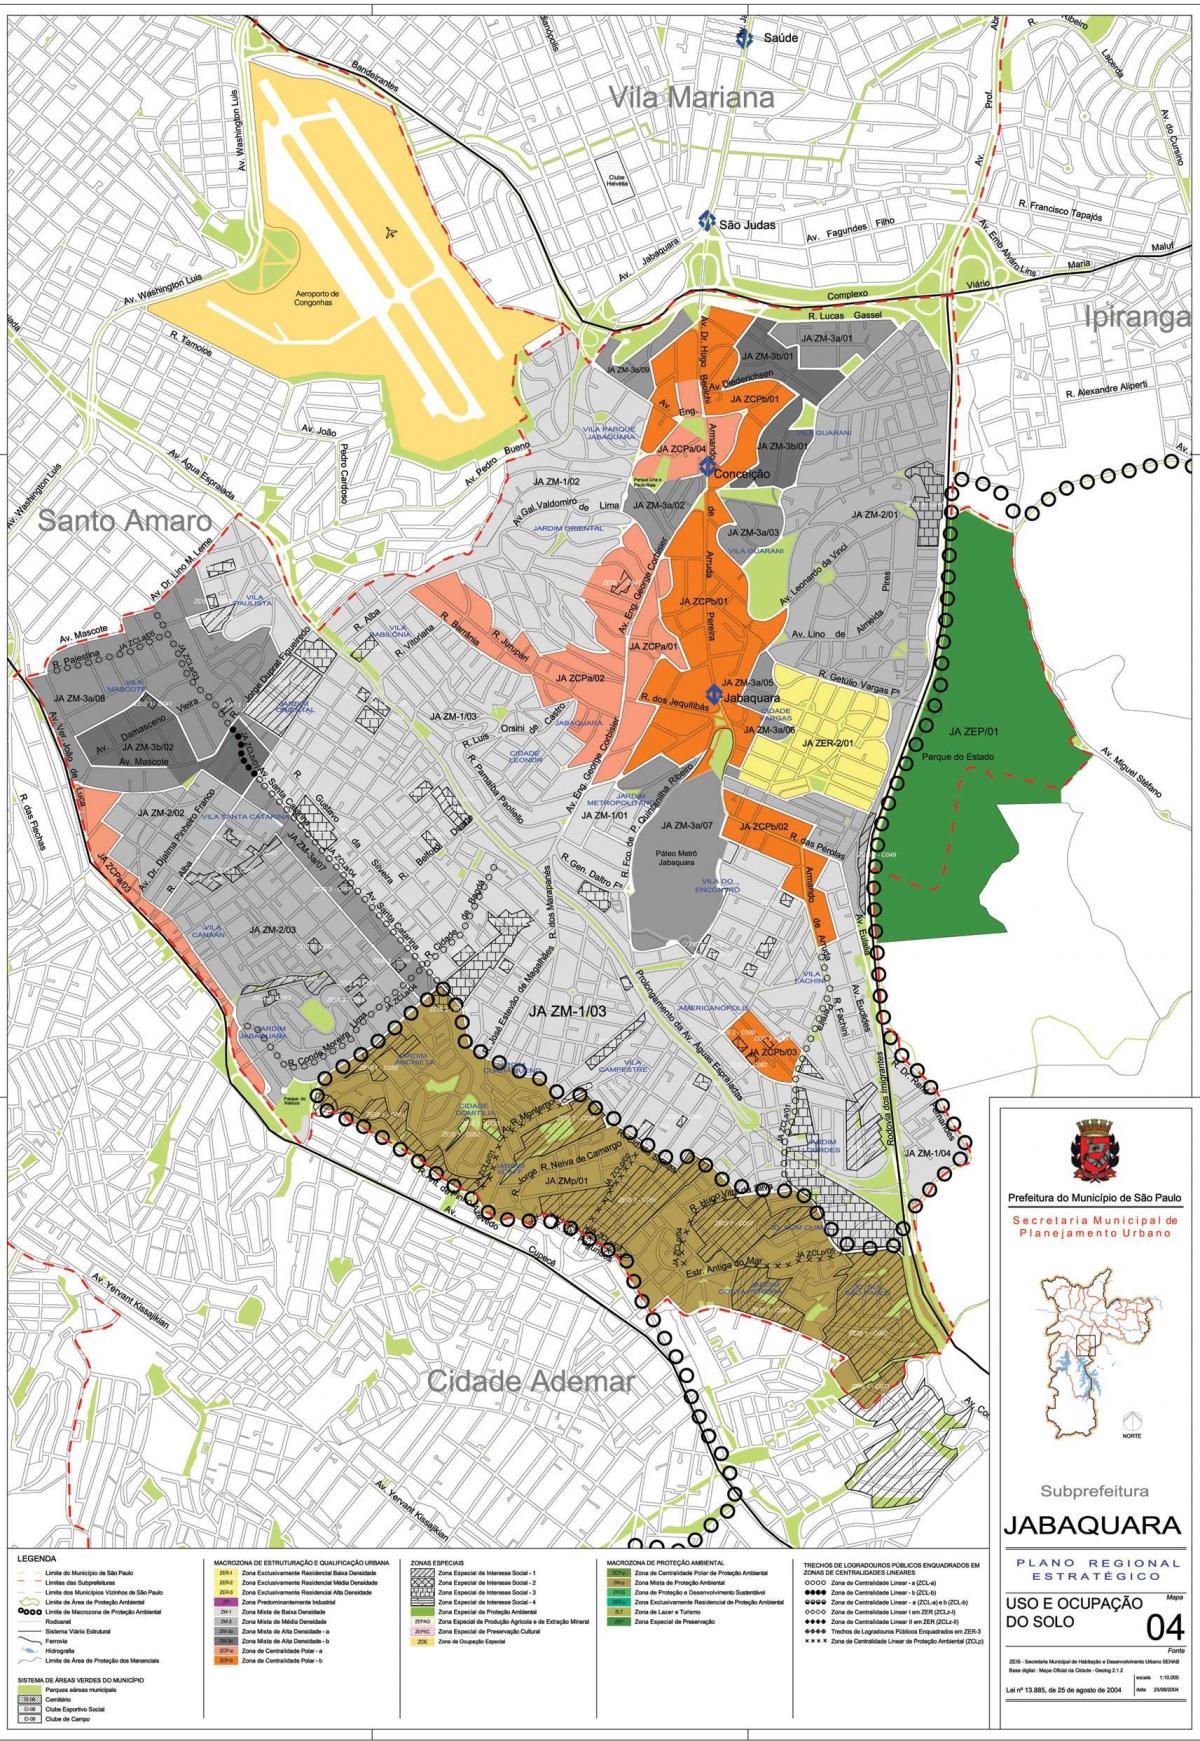 Harta e Jabaquara São Paulo - Pushtimi i tokës